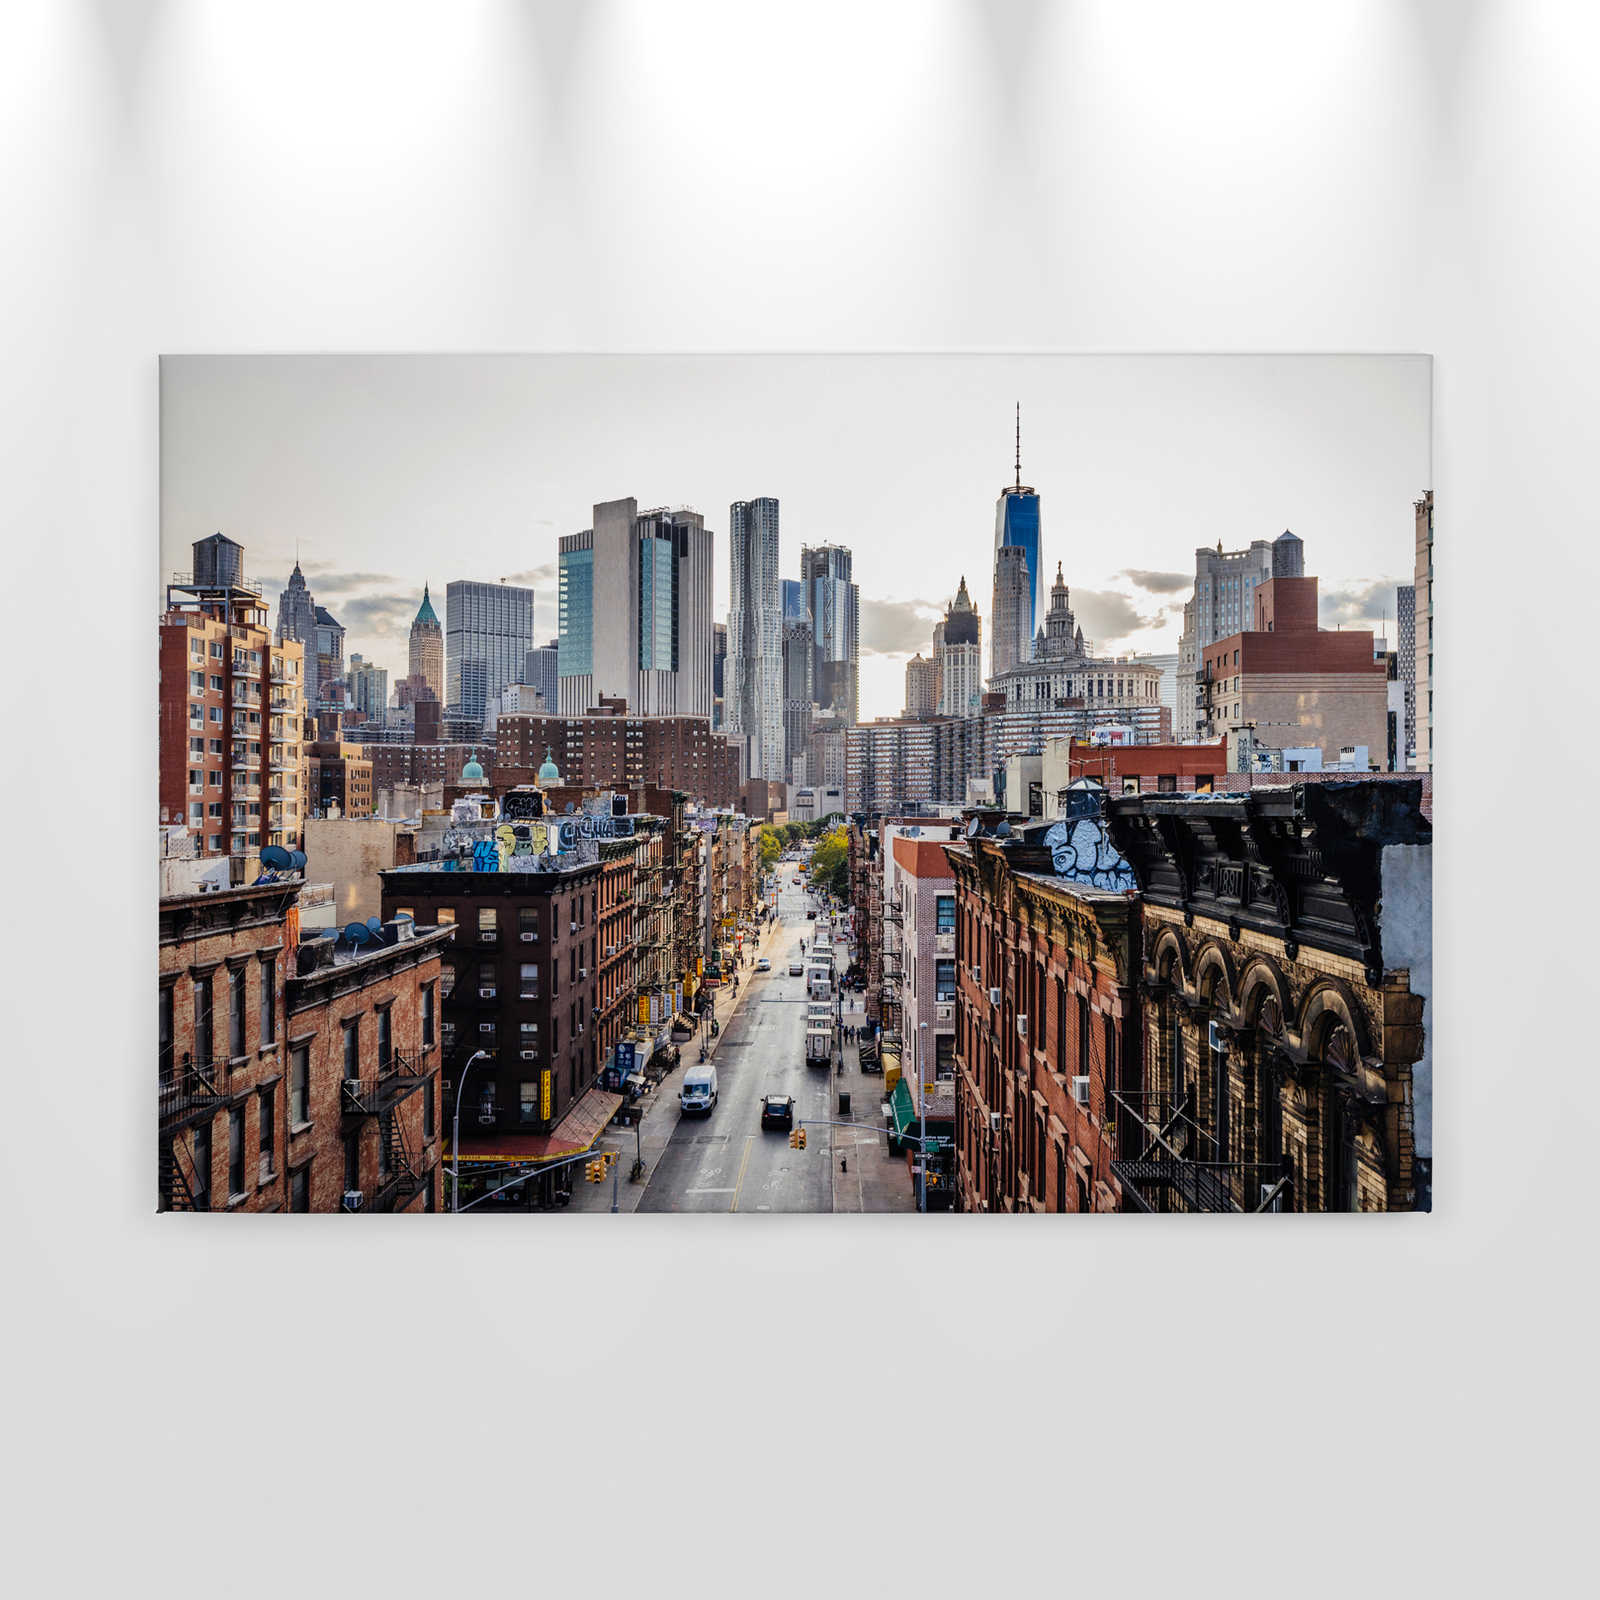             New York Leinwand mit Skyline – 0,90 m x 0,60 m
        